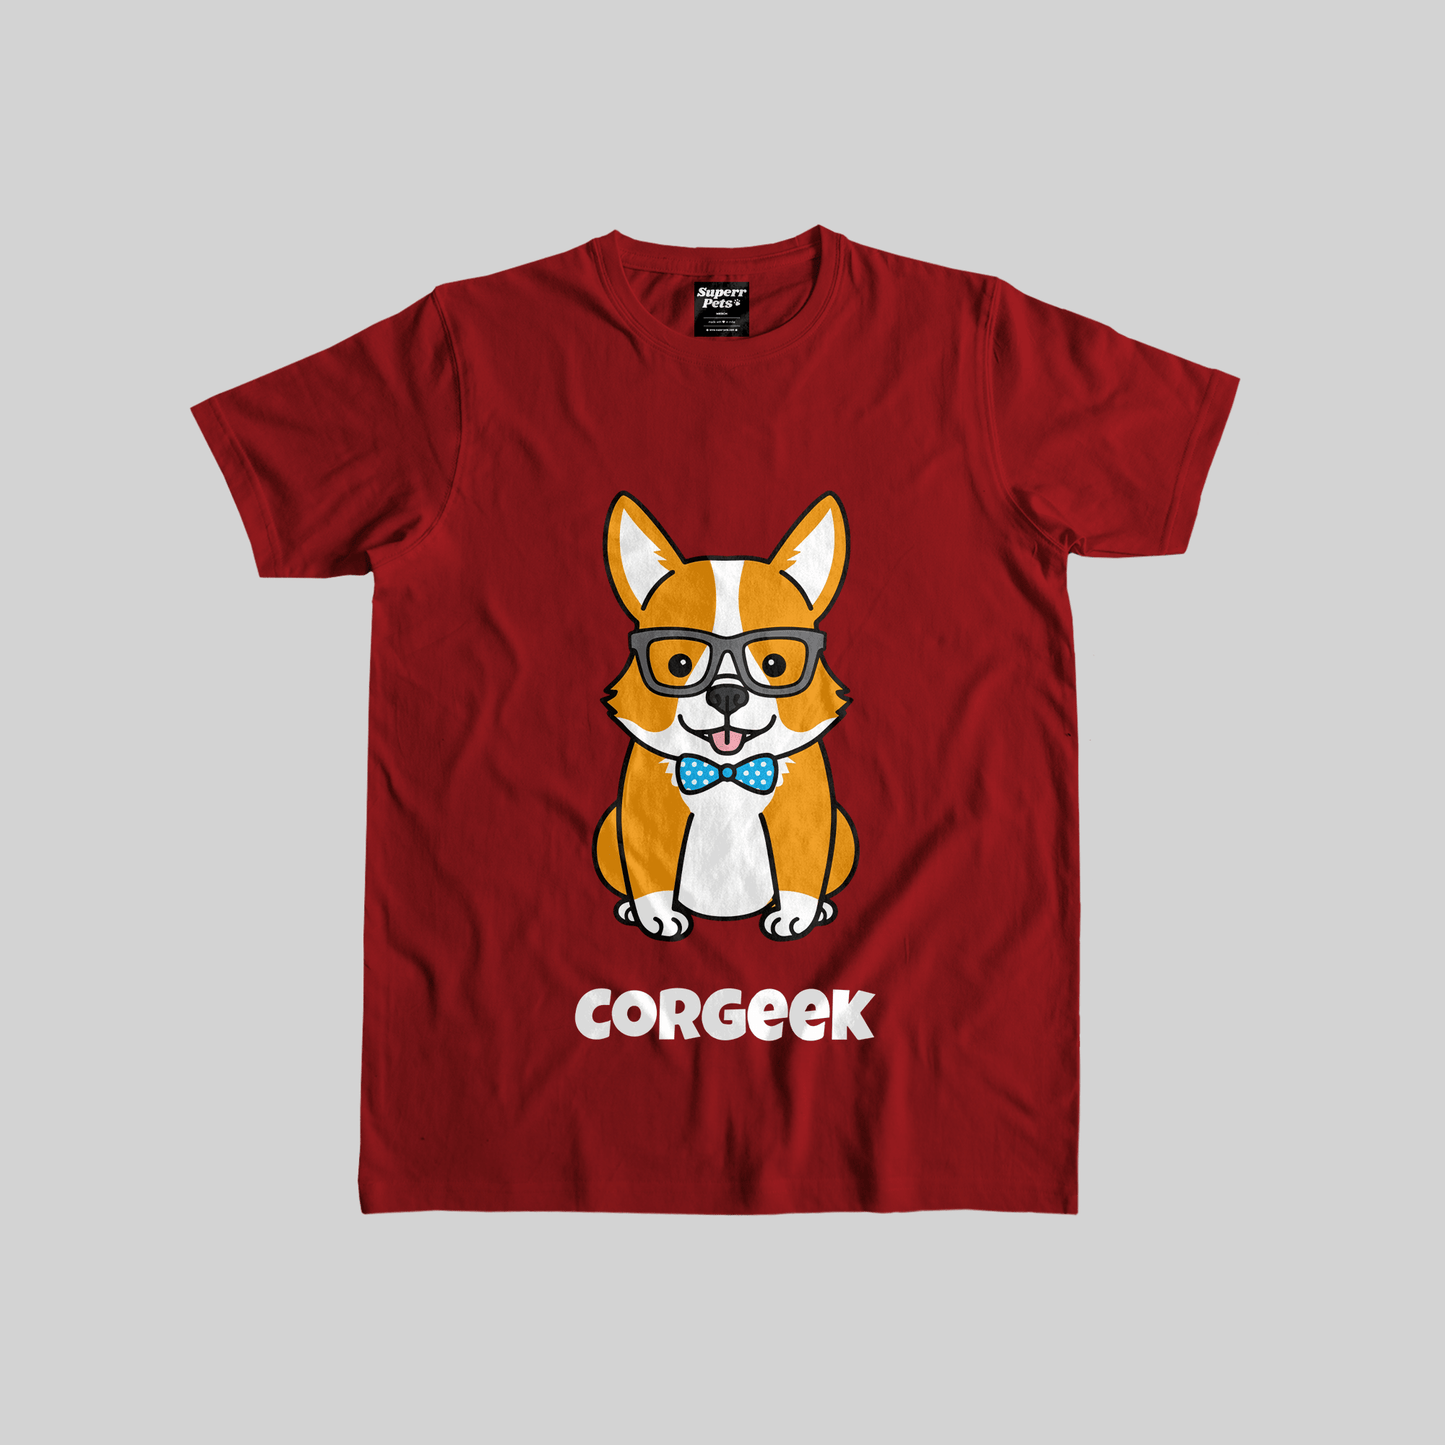 Superr Pets Casual T-Shirt Casual T-Shirt / Red / L Corgeek | Casual T-Shirt